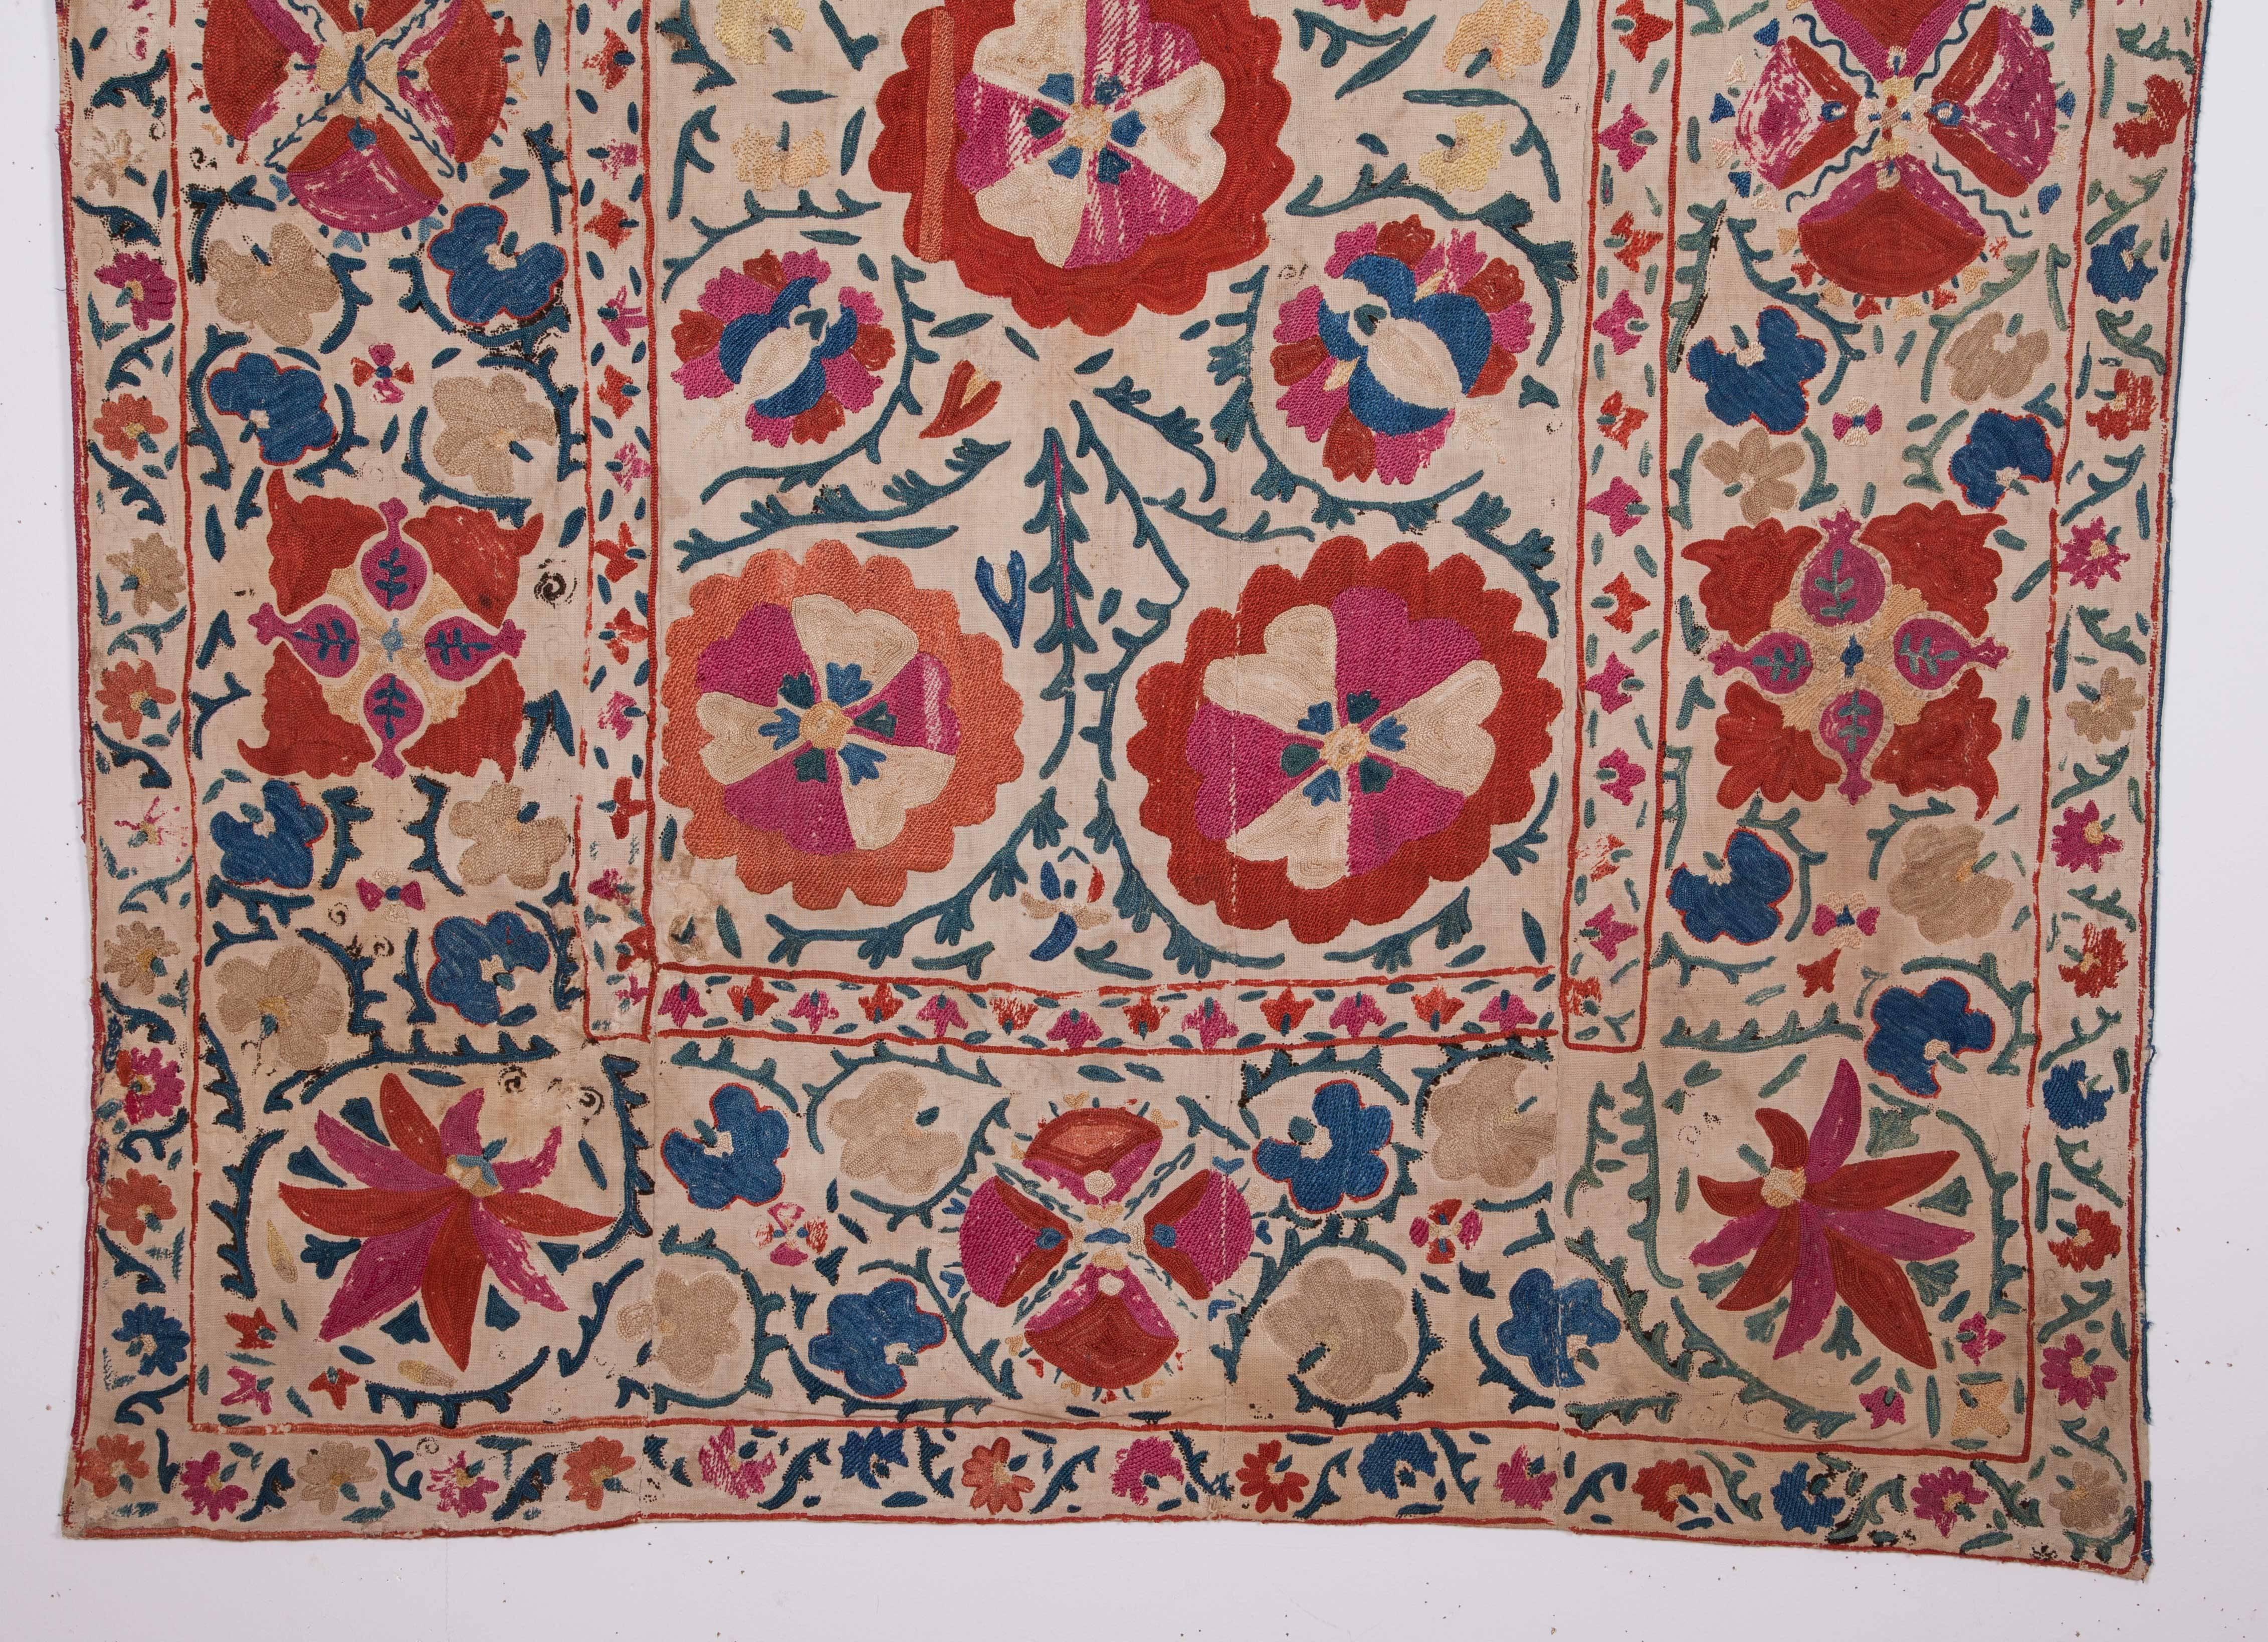 Embroidered 19th Century Antique Suzani from Bukhara, Uzbekistan